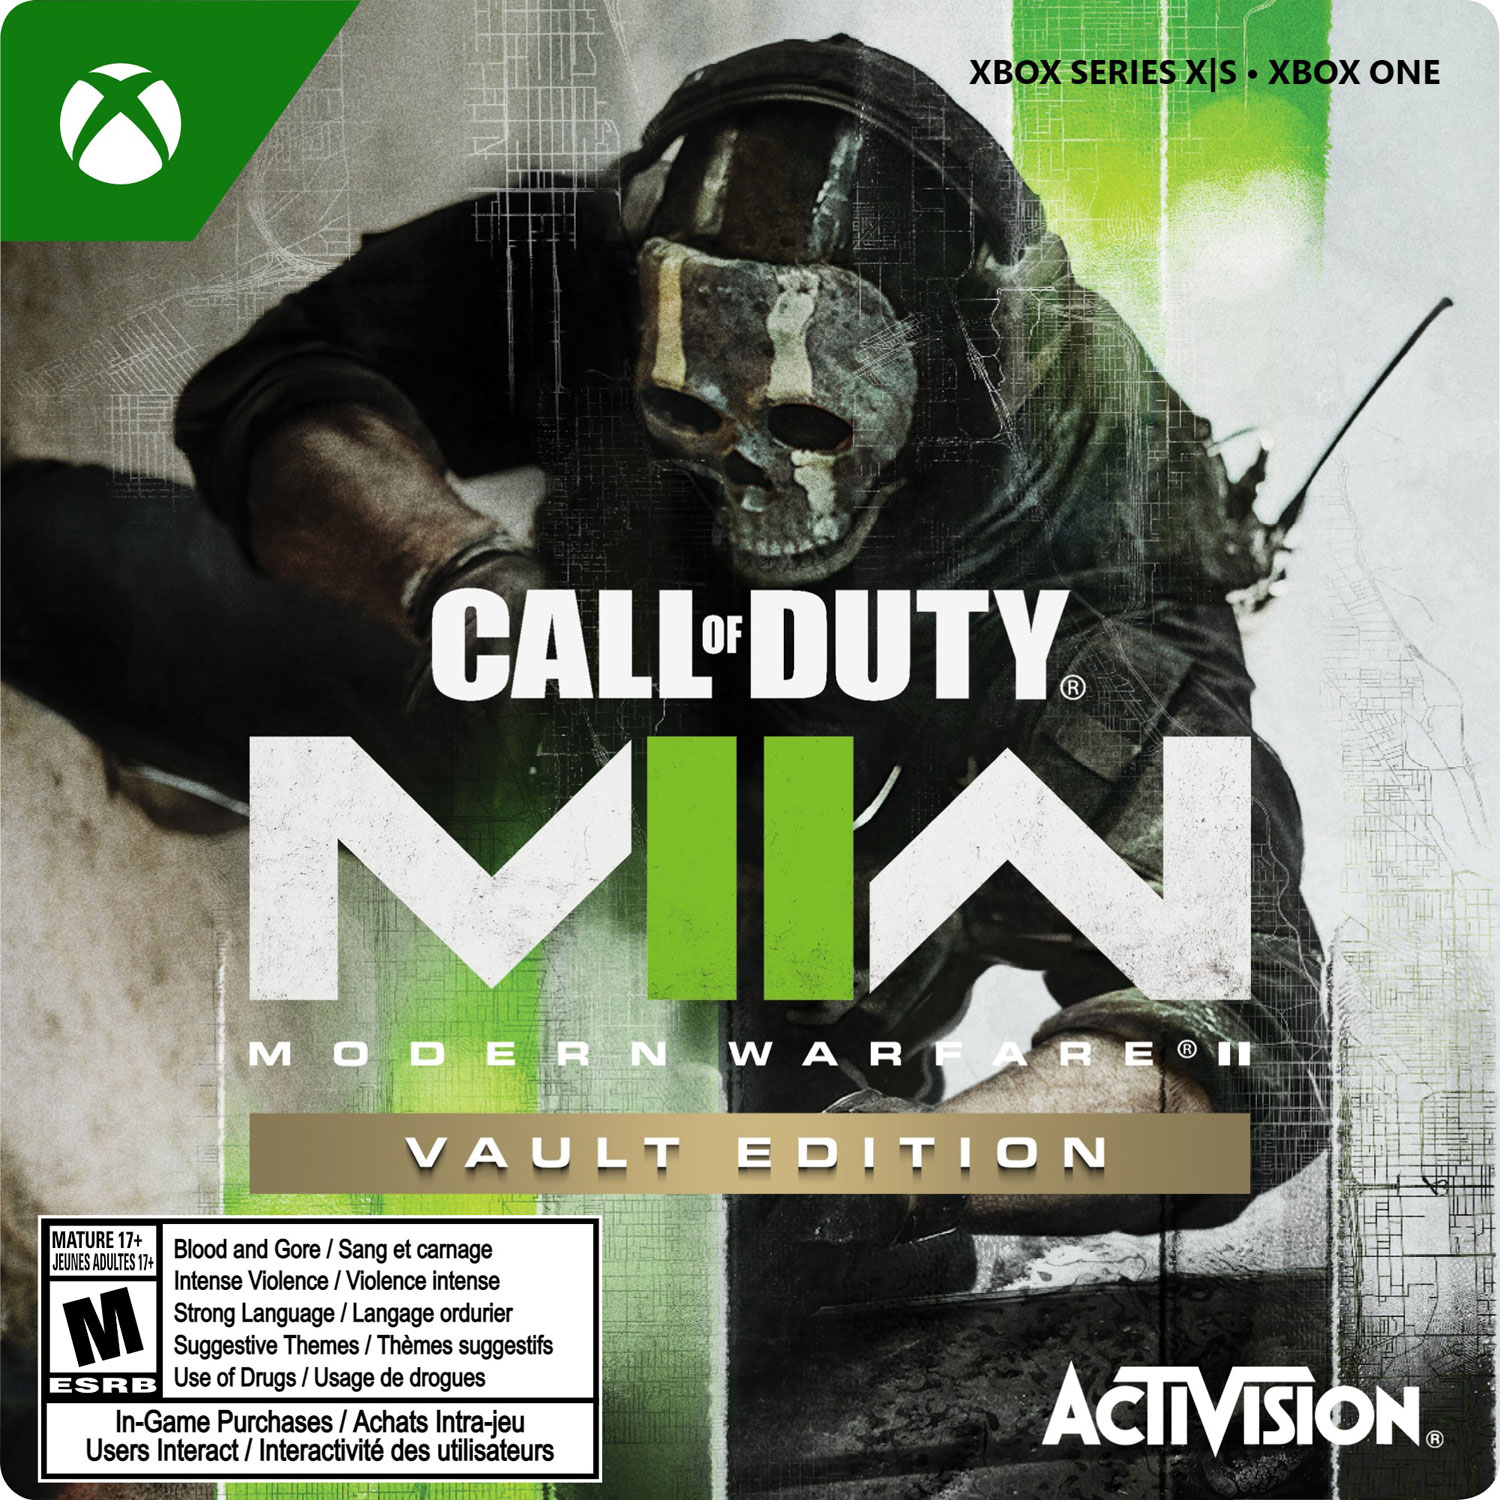 Call of Duty: Modern Warfare II Vault Edition (Xbox Series X|S / Xbox One) - Digital Download